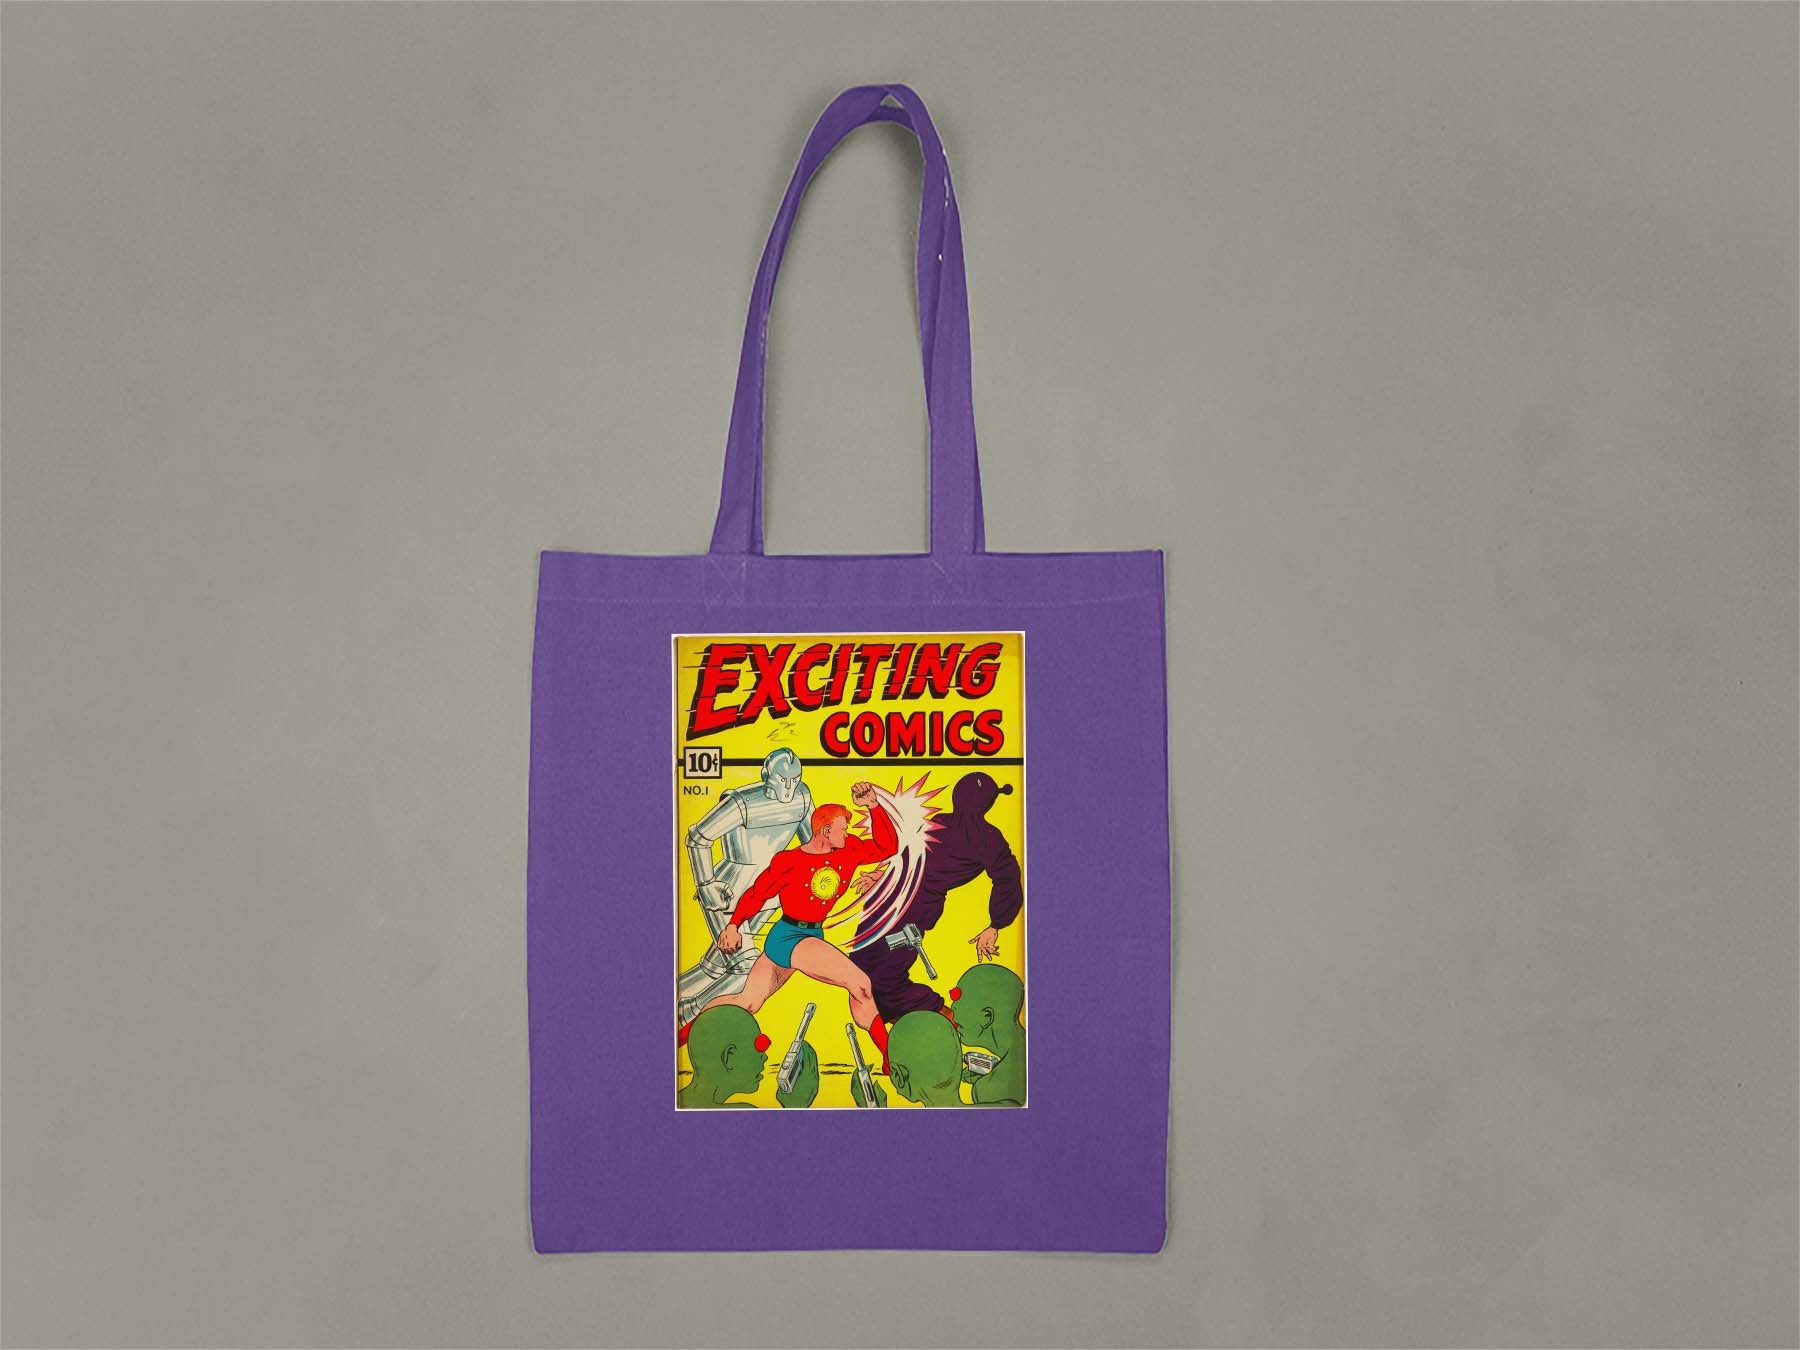 Exciting Comics No.1 Tote Bag  Purple